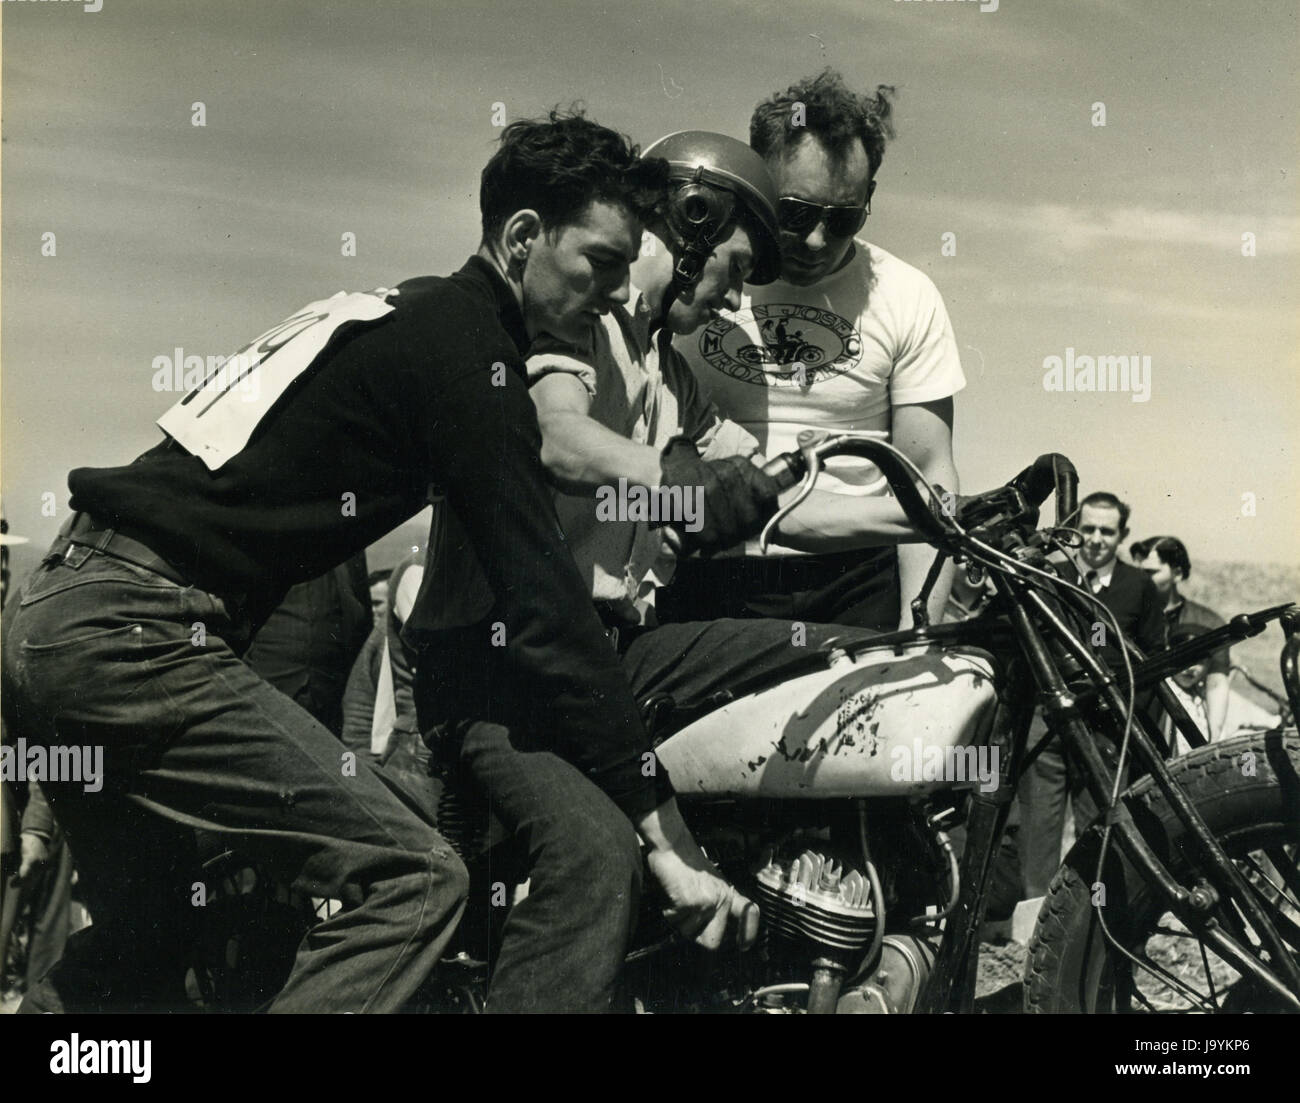 Santa Clara County, California, April 5, 1940-Members of a Motorcycle Club prepare to race in a hill climb. Stock Photo